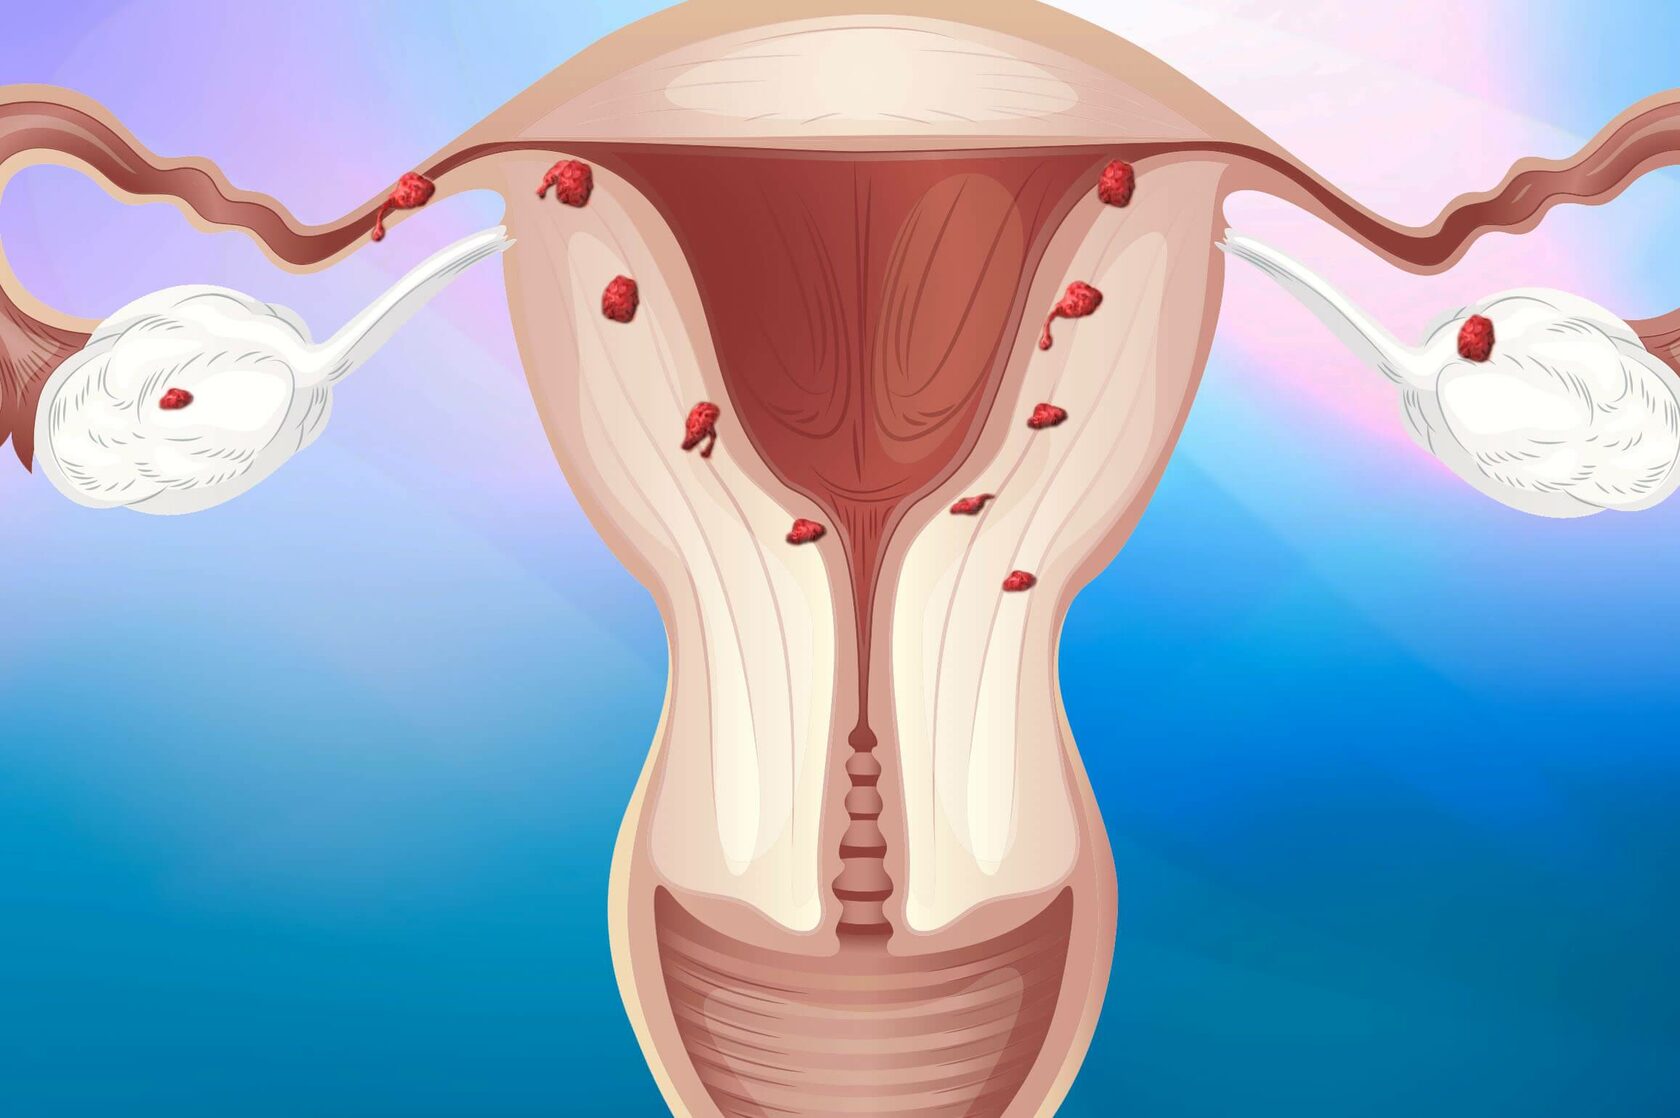 Надвлагалищная ампутация матки (субтотальная гистерэктомия)